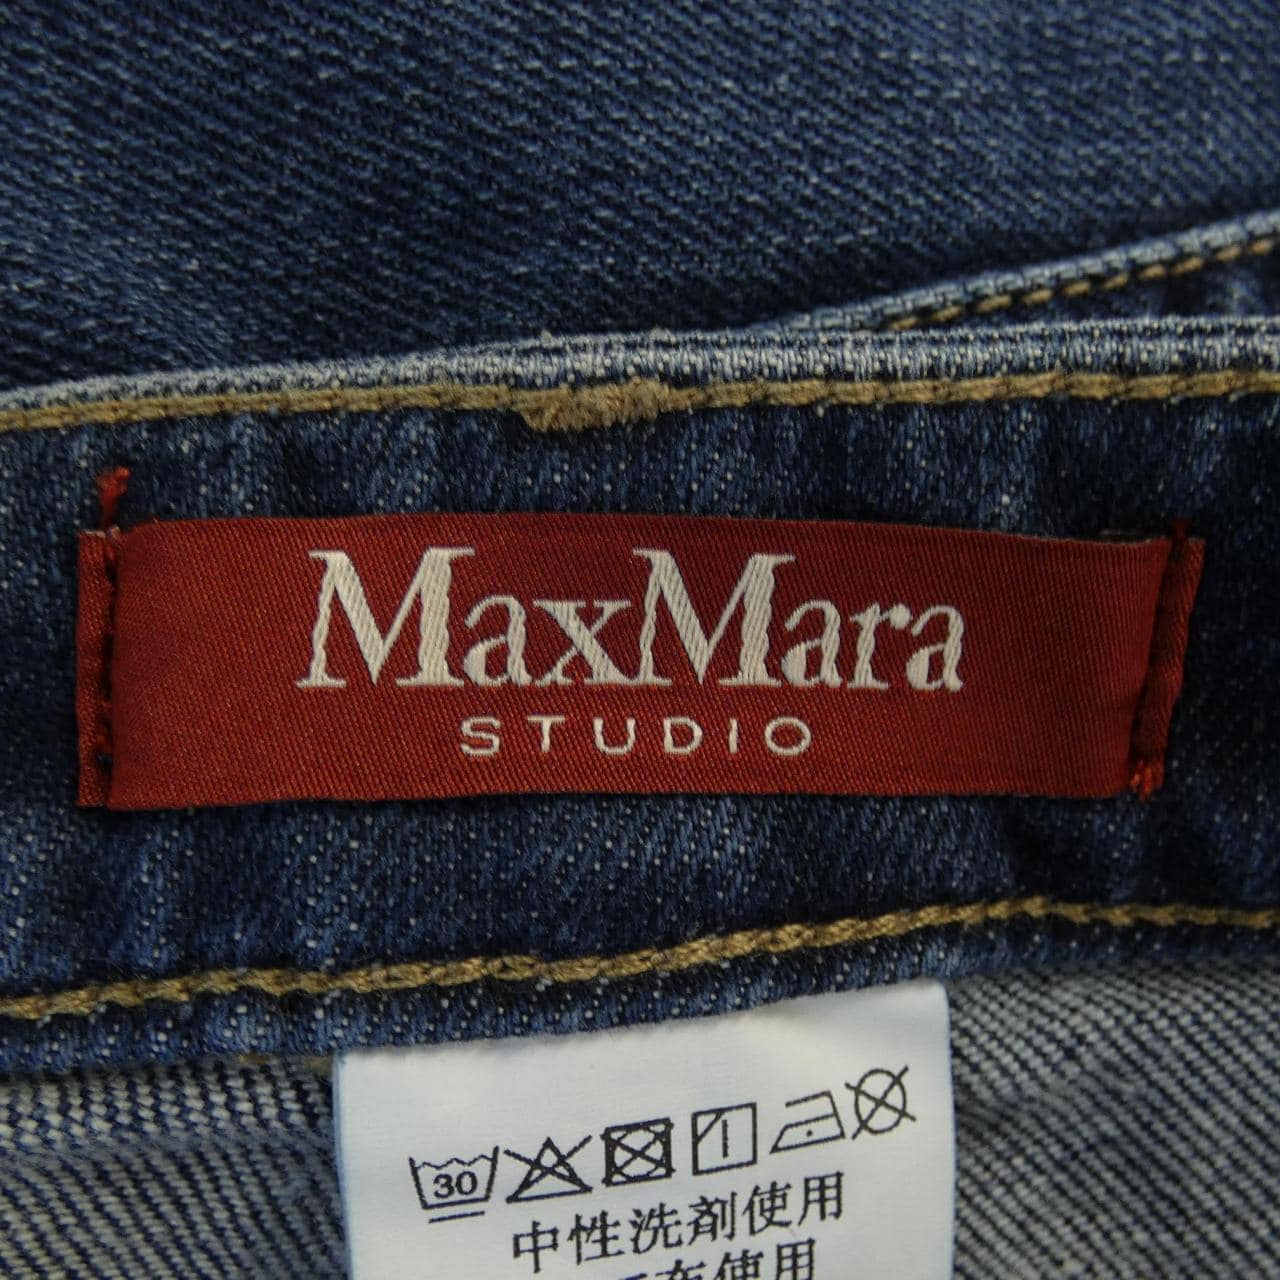 Max Max Mara STUDIO STUDIO 牛仔裤